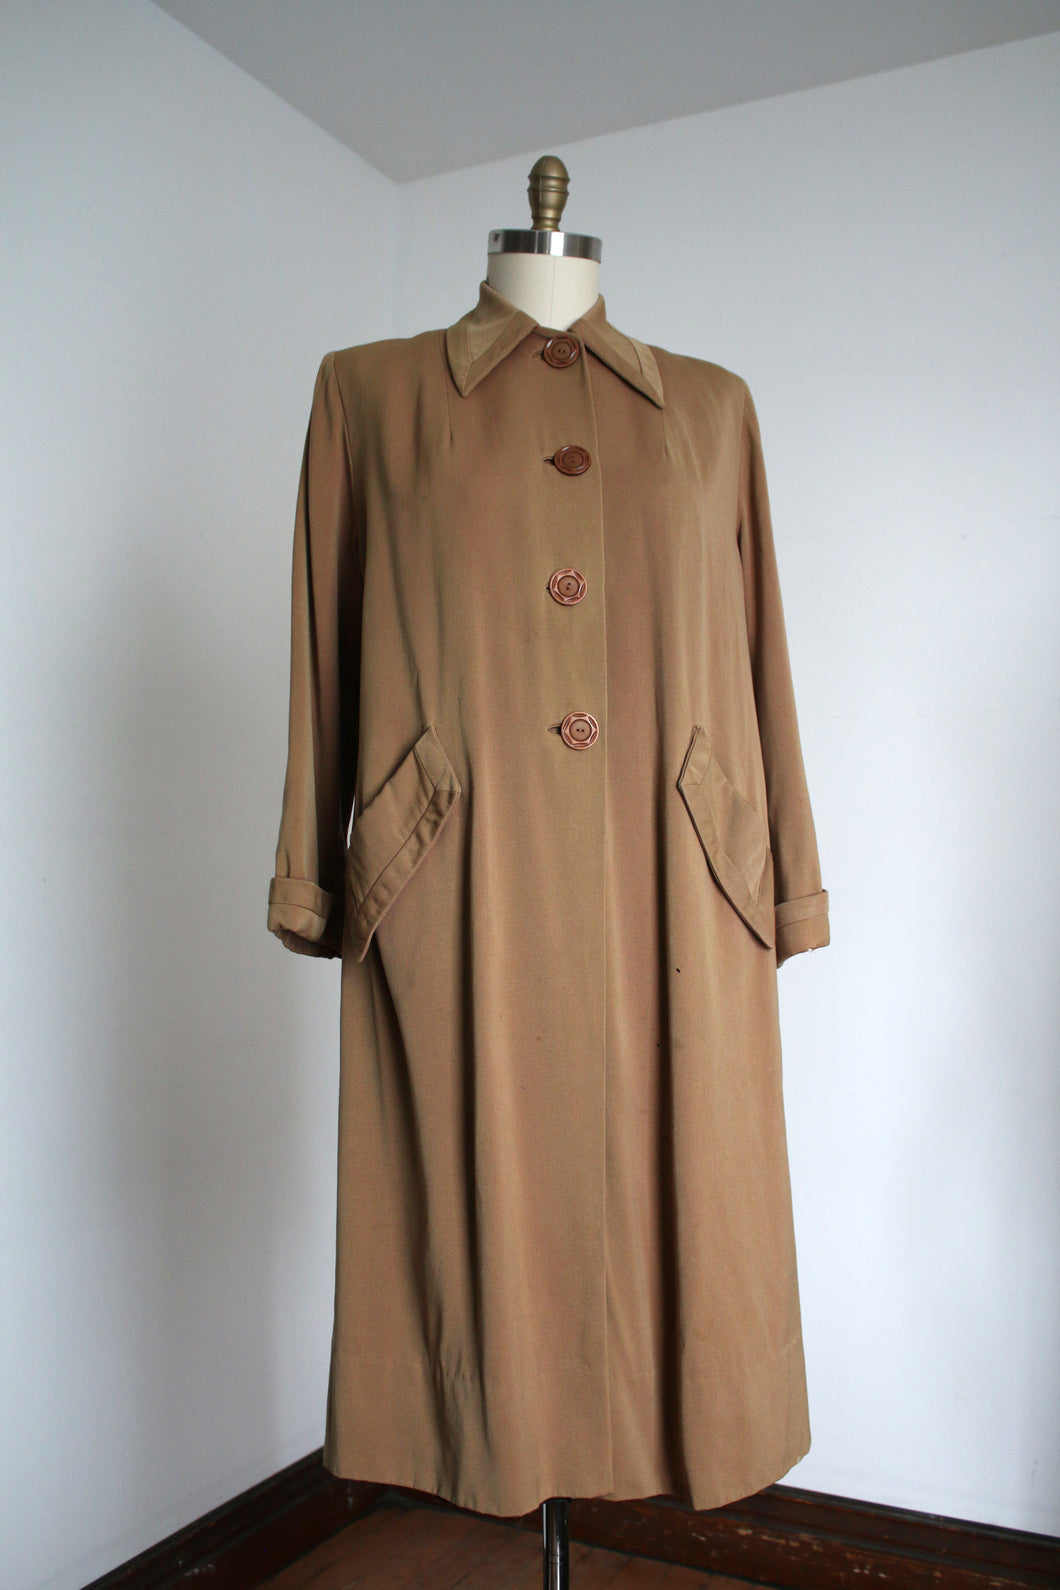 MARKED DOWN vintage 1940s wool coat {m/l}